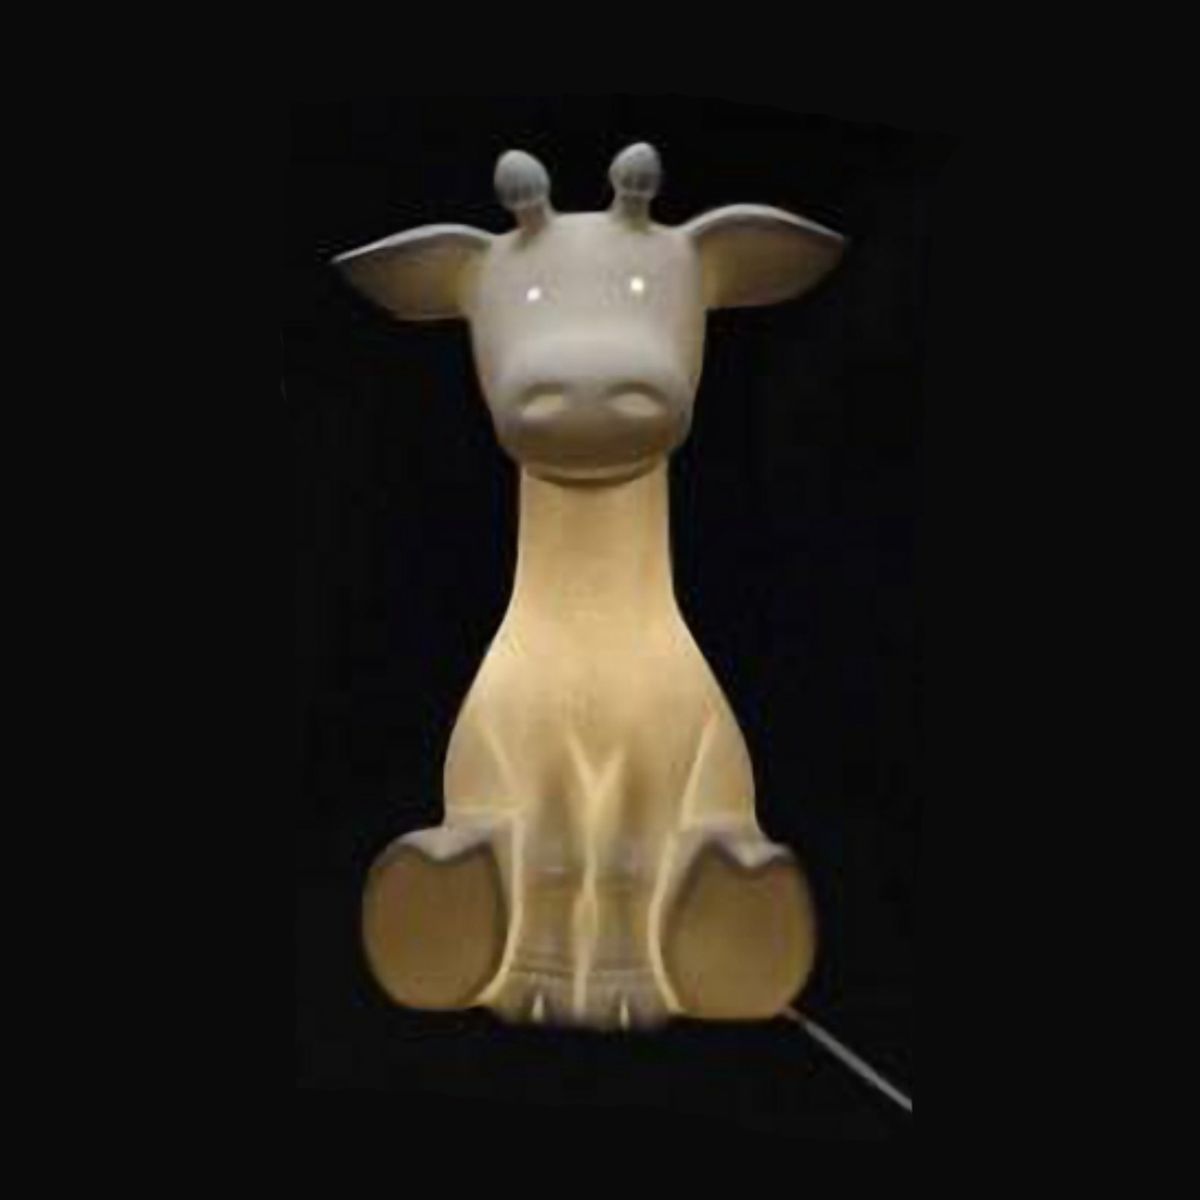 Lampe  poser en porcelaine blanche girafe 30 cm